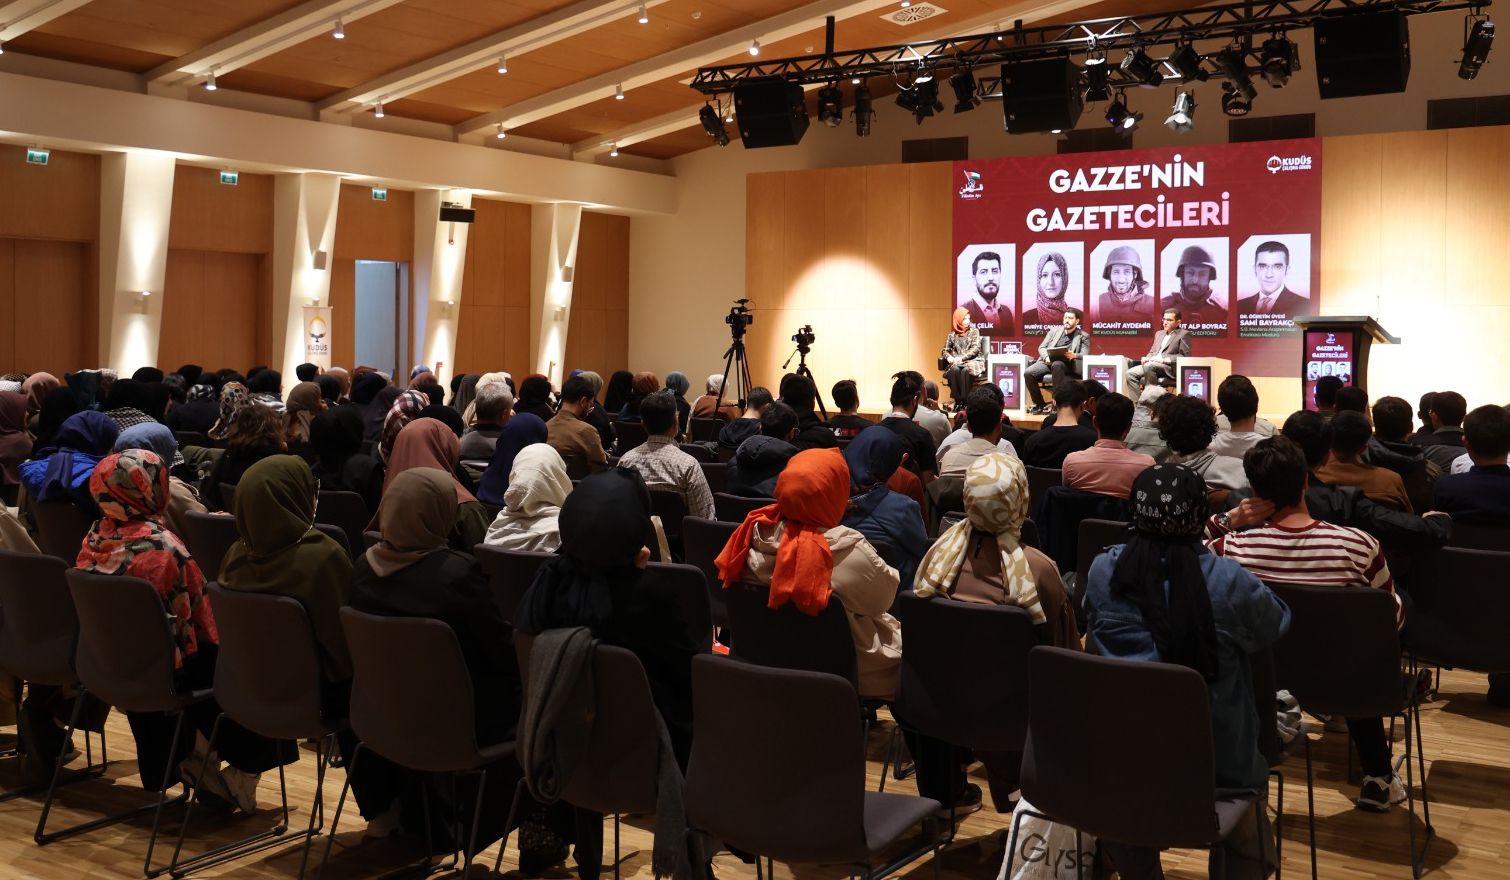 Konya'da Gazze'nin Gazetecileri Konferansı